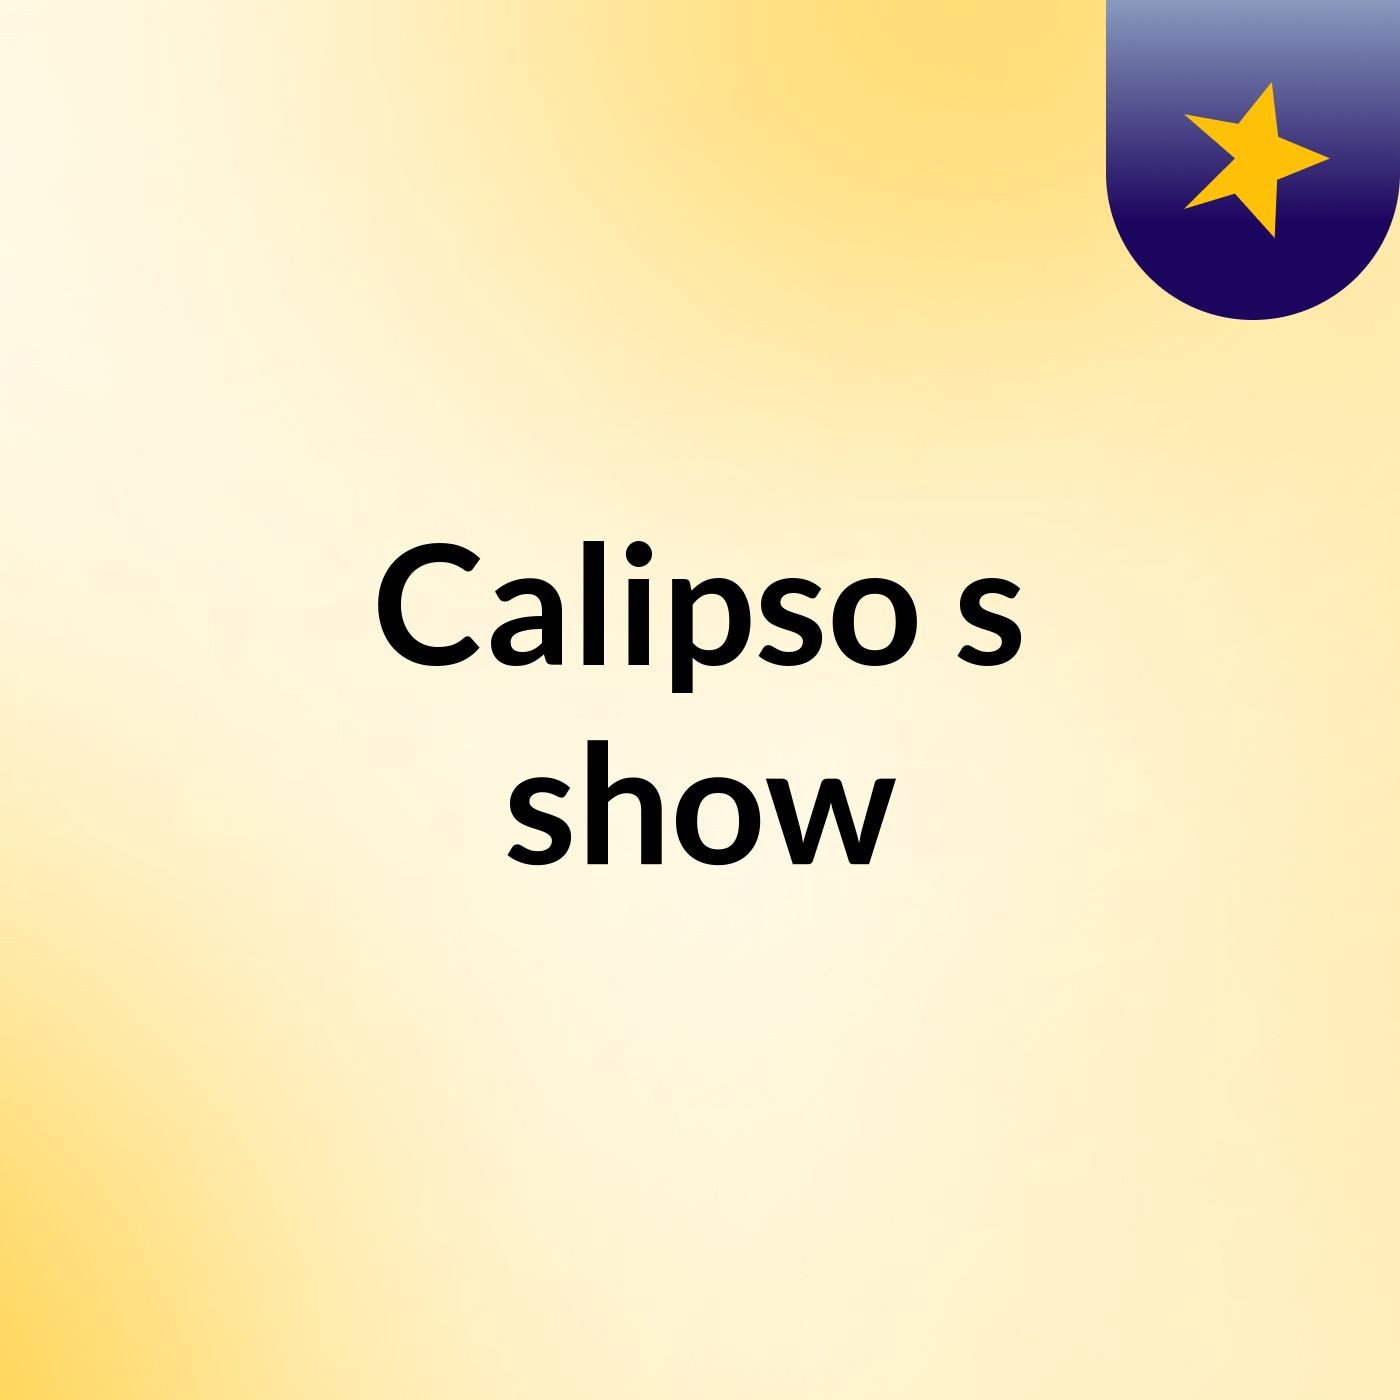 Calipso's show